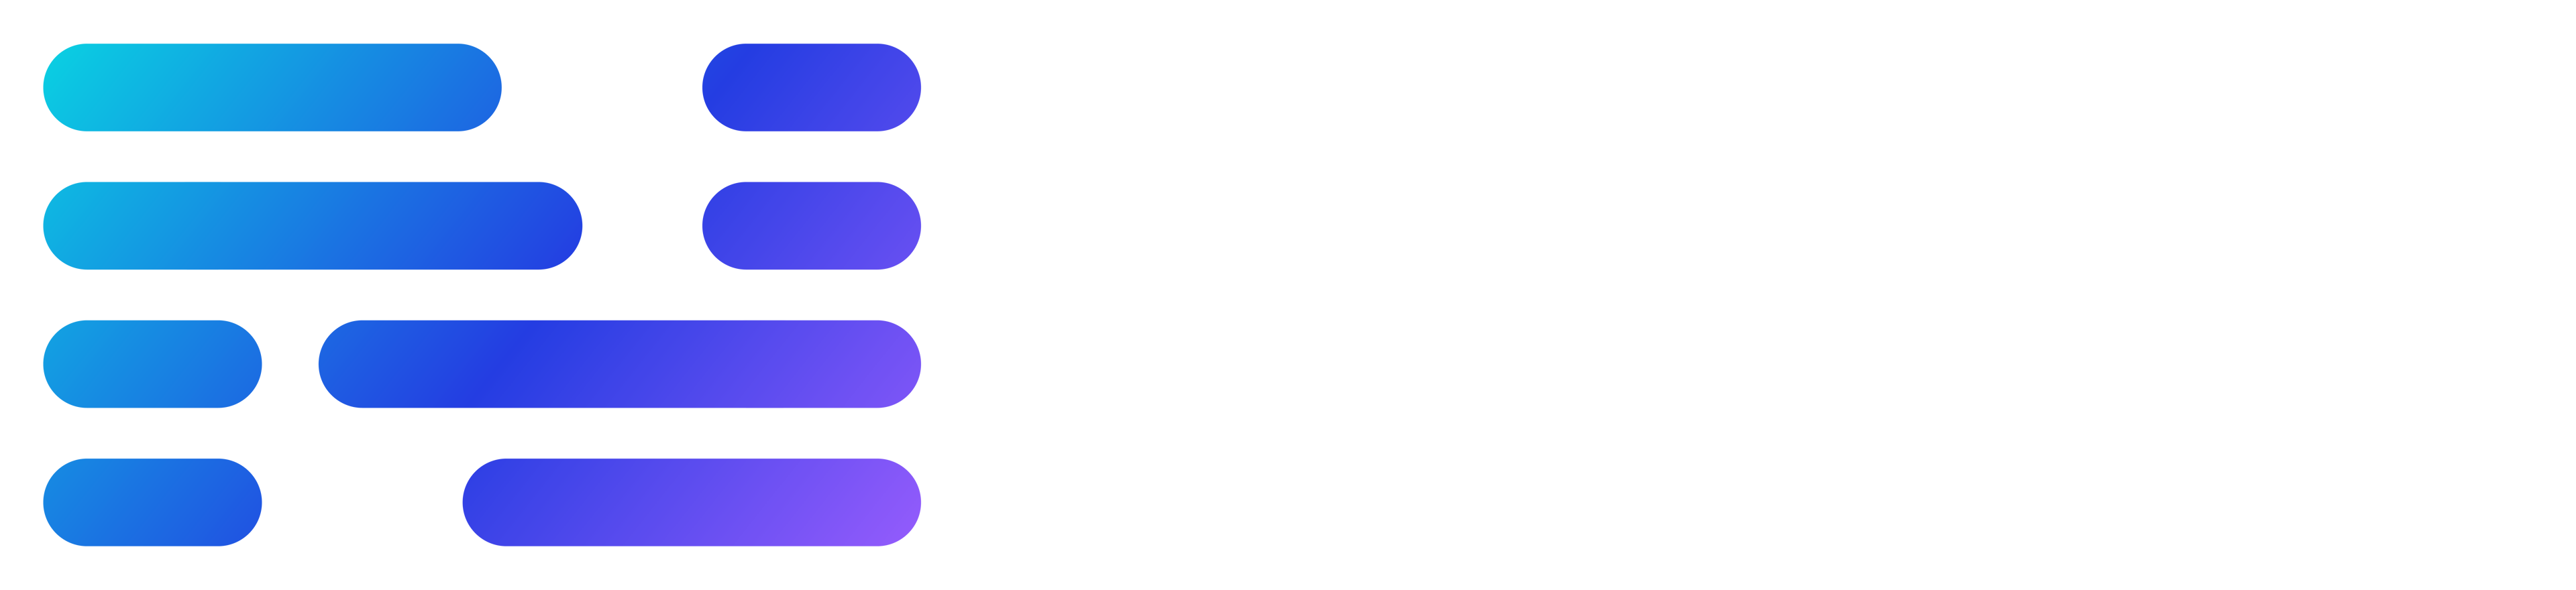 Nexus Smoke Help Center logo